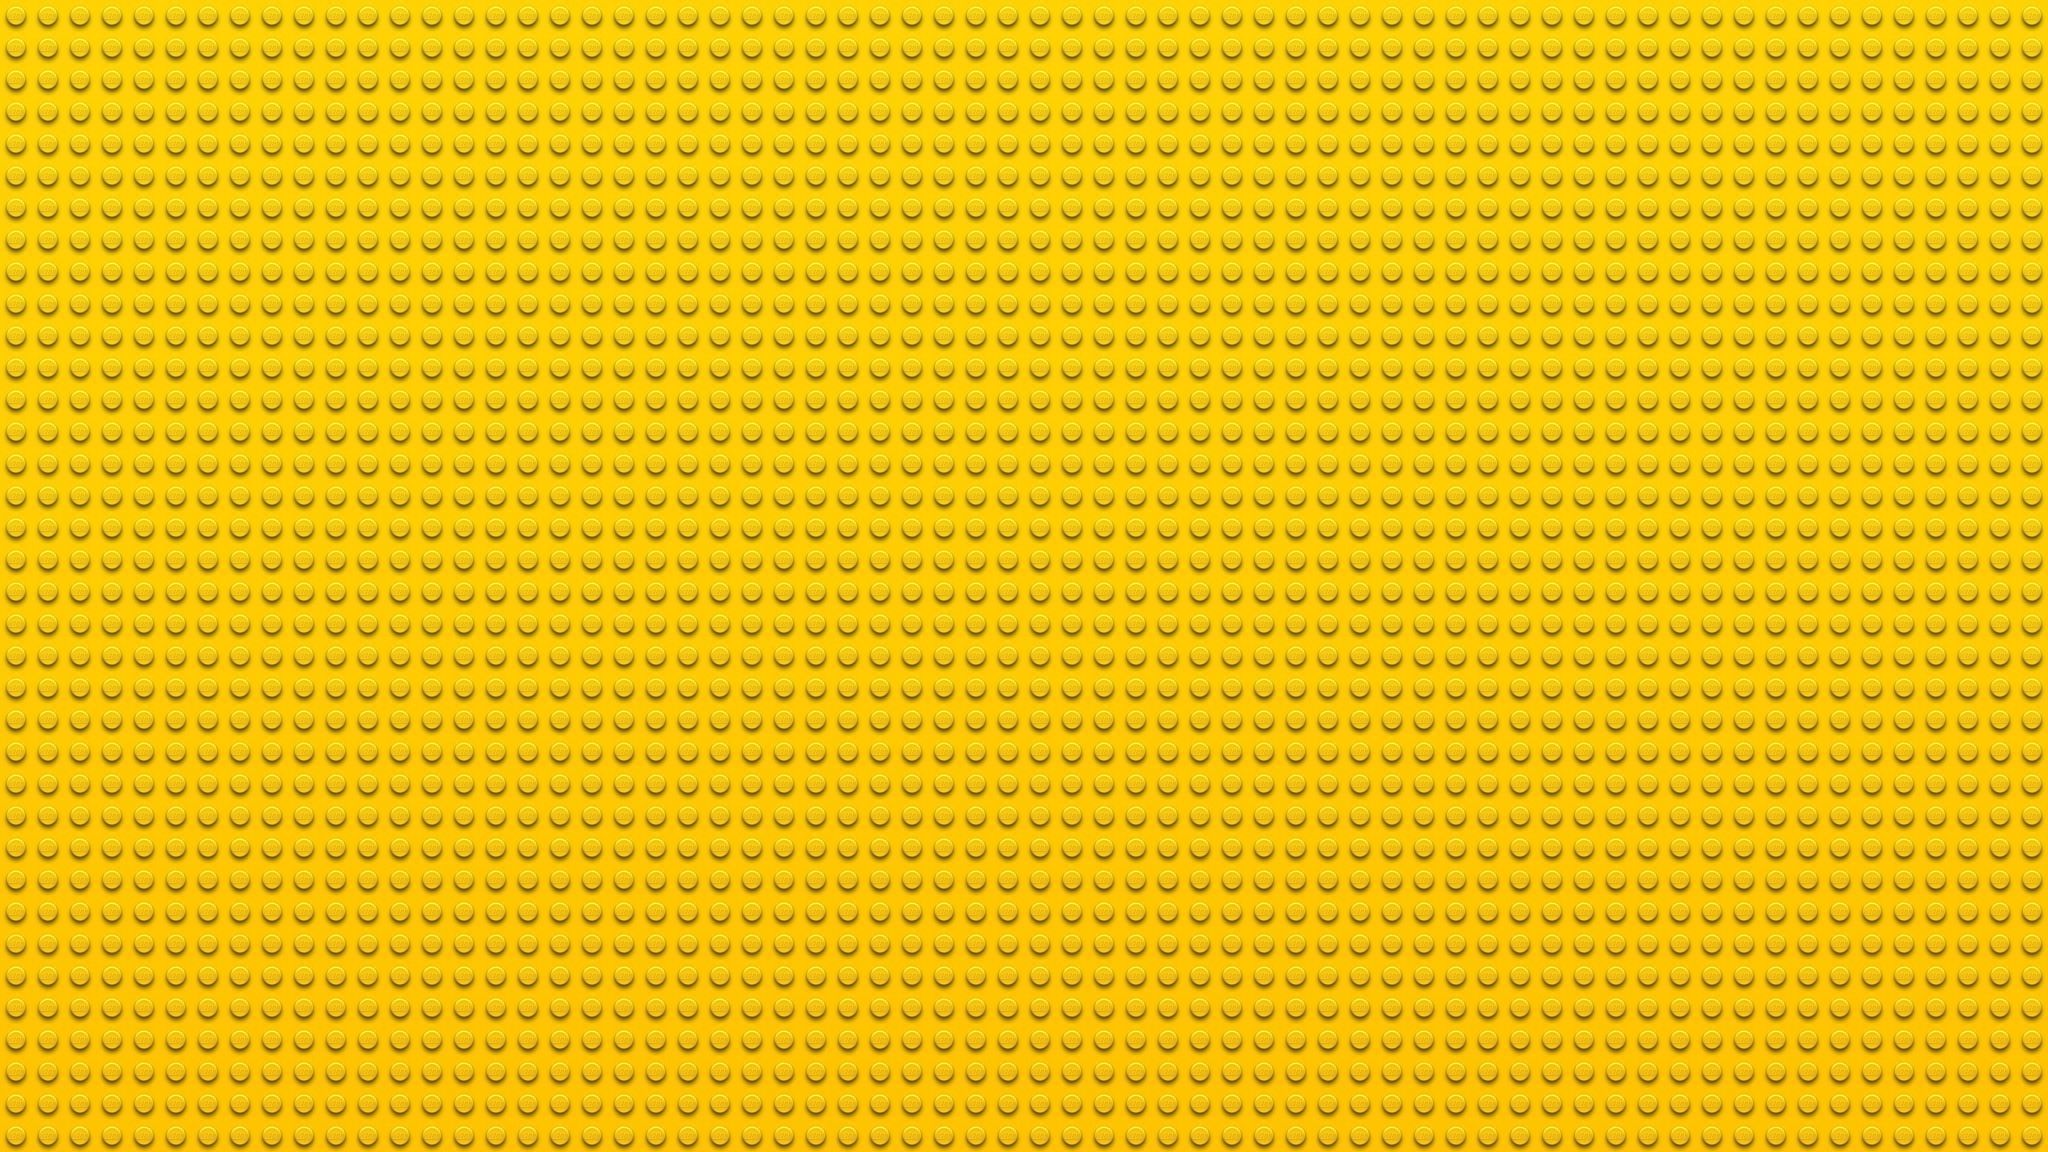 HD Lego Wallpapers HD, Desktop Backgrounds 2048x1152